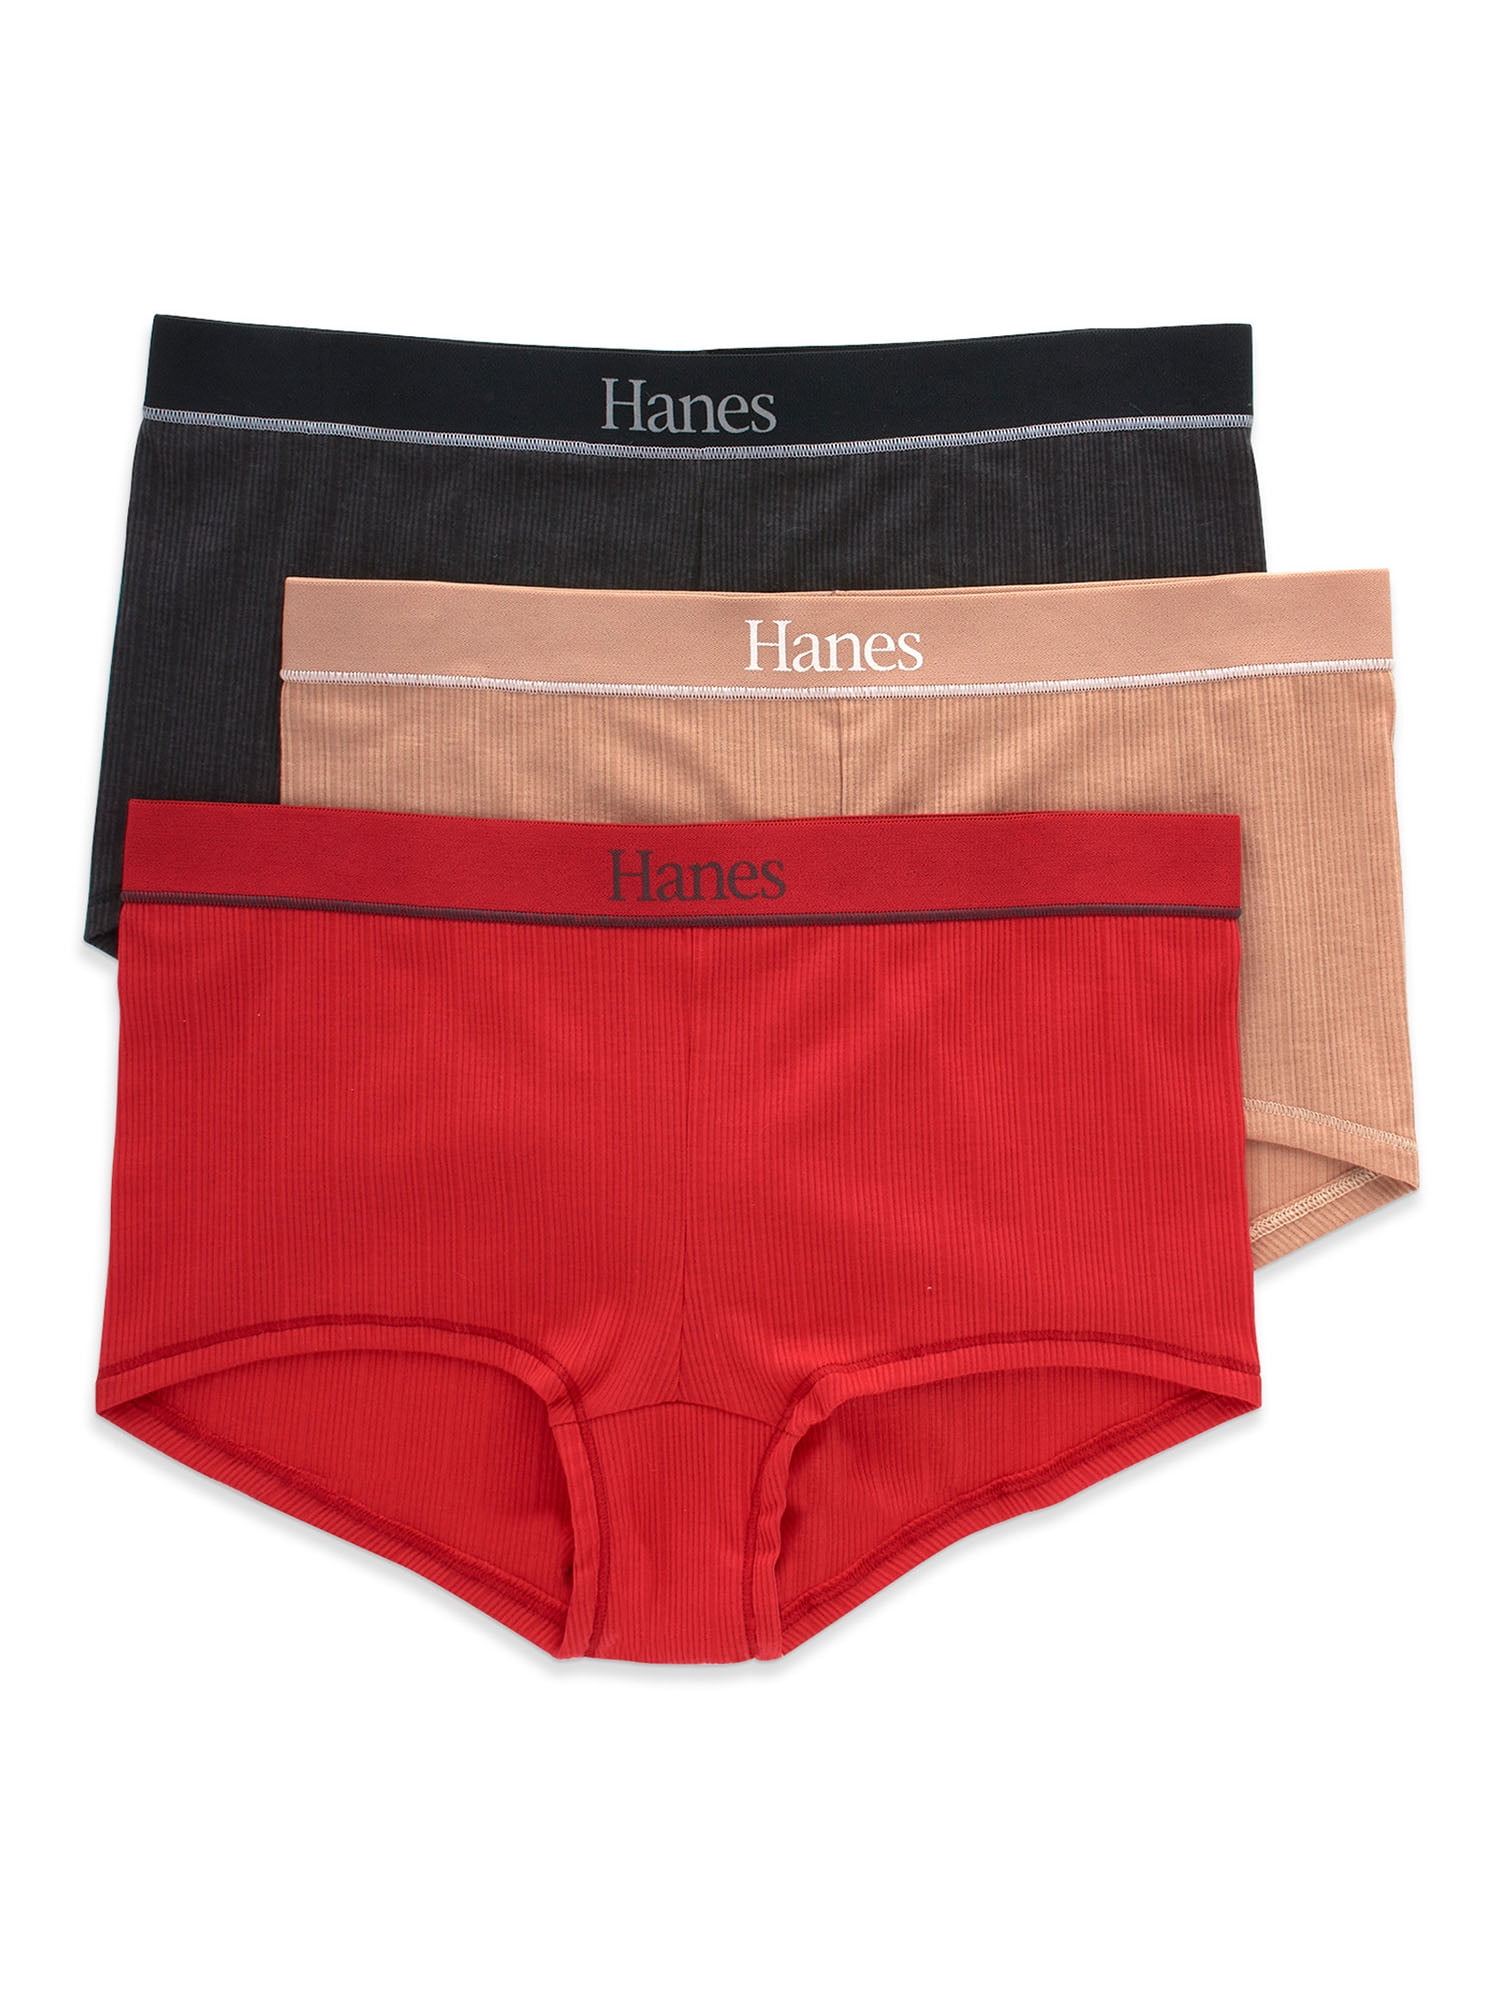 Hanes Originals Women's Boyshorts Underwear, Soft & Stretchy Ribbed Blend, 3 -Pack 